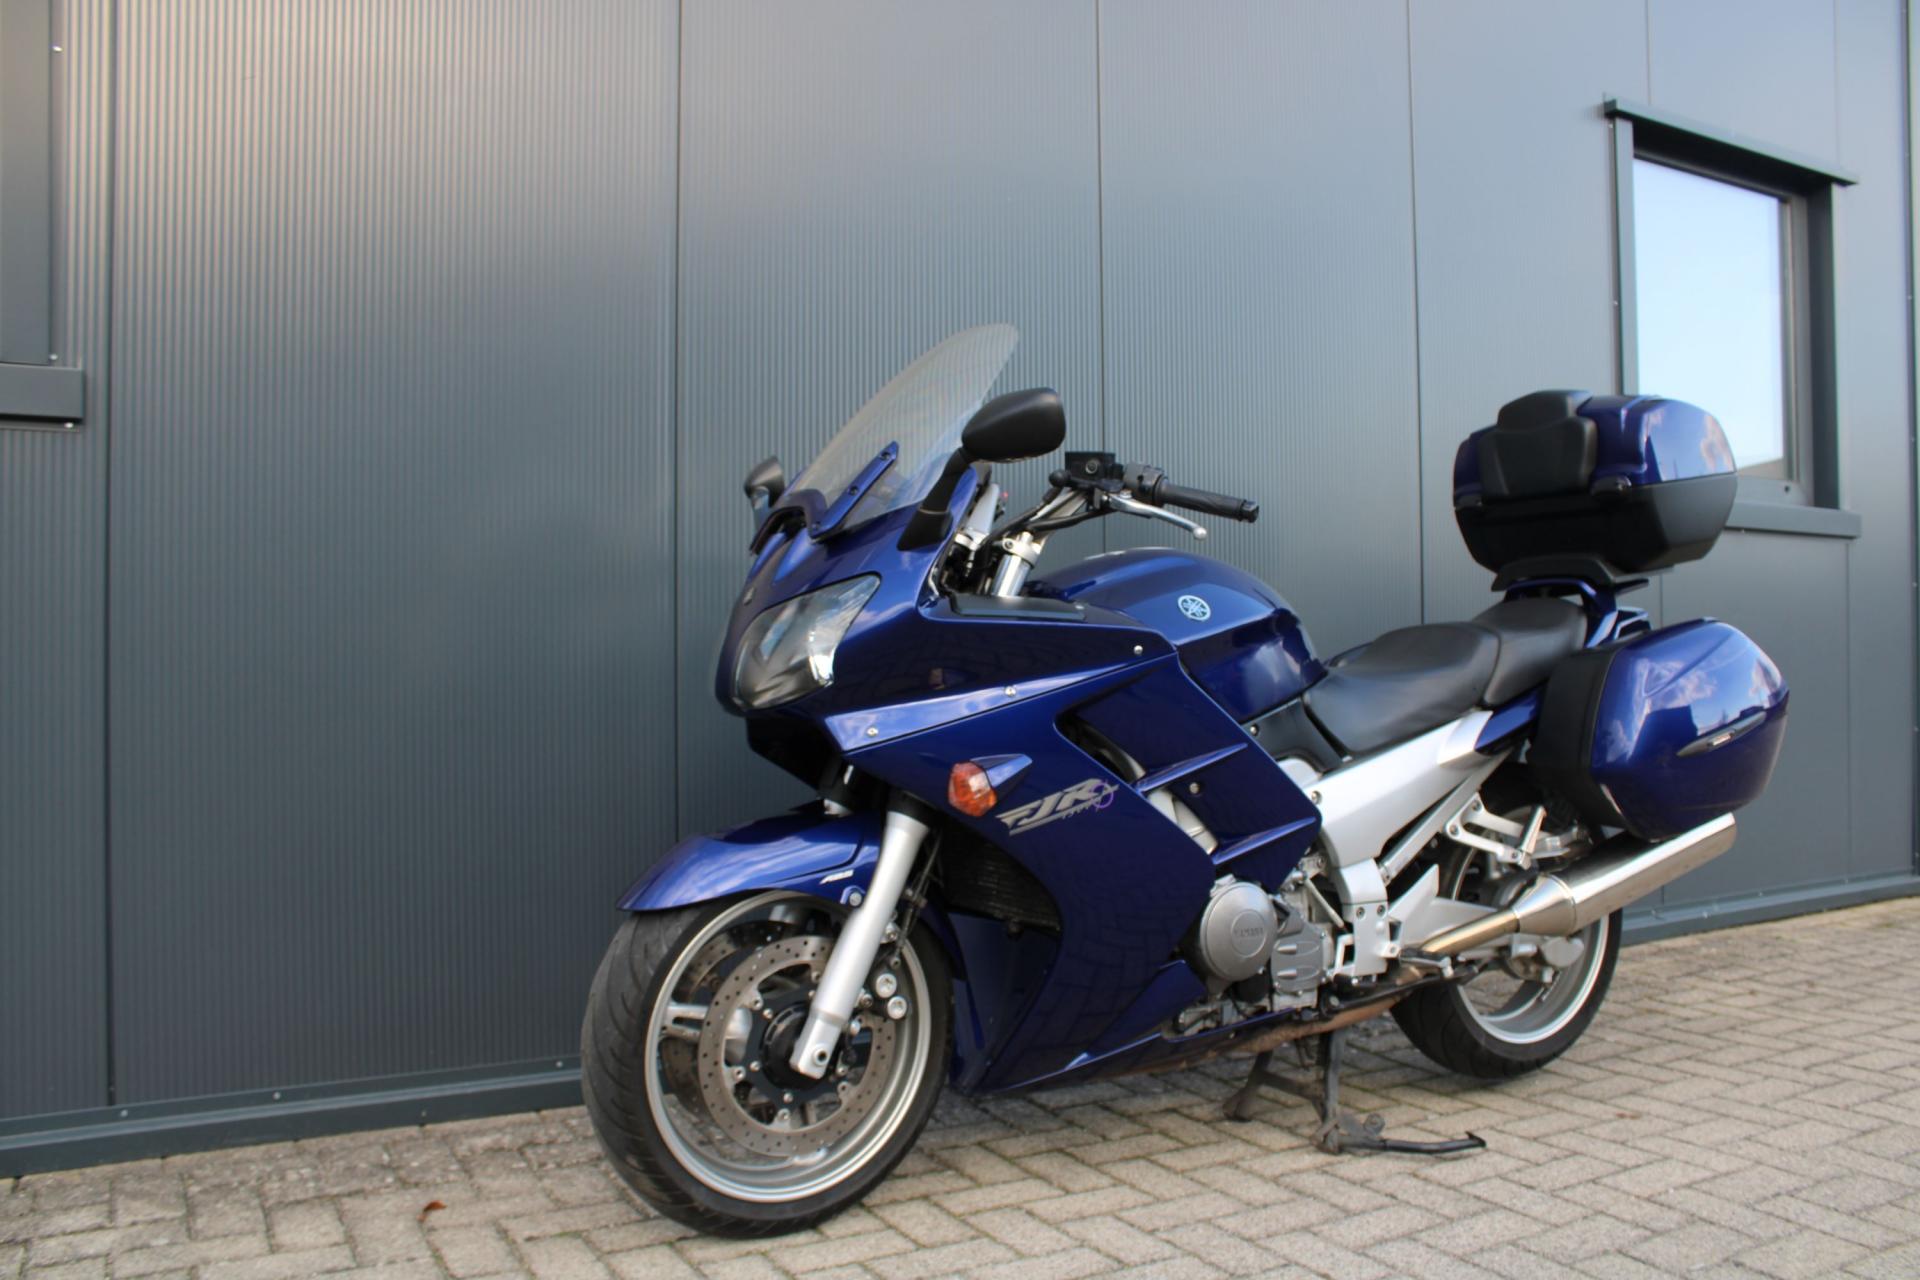 Yamaha FJR 1300A (01.JPG)